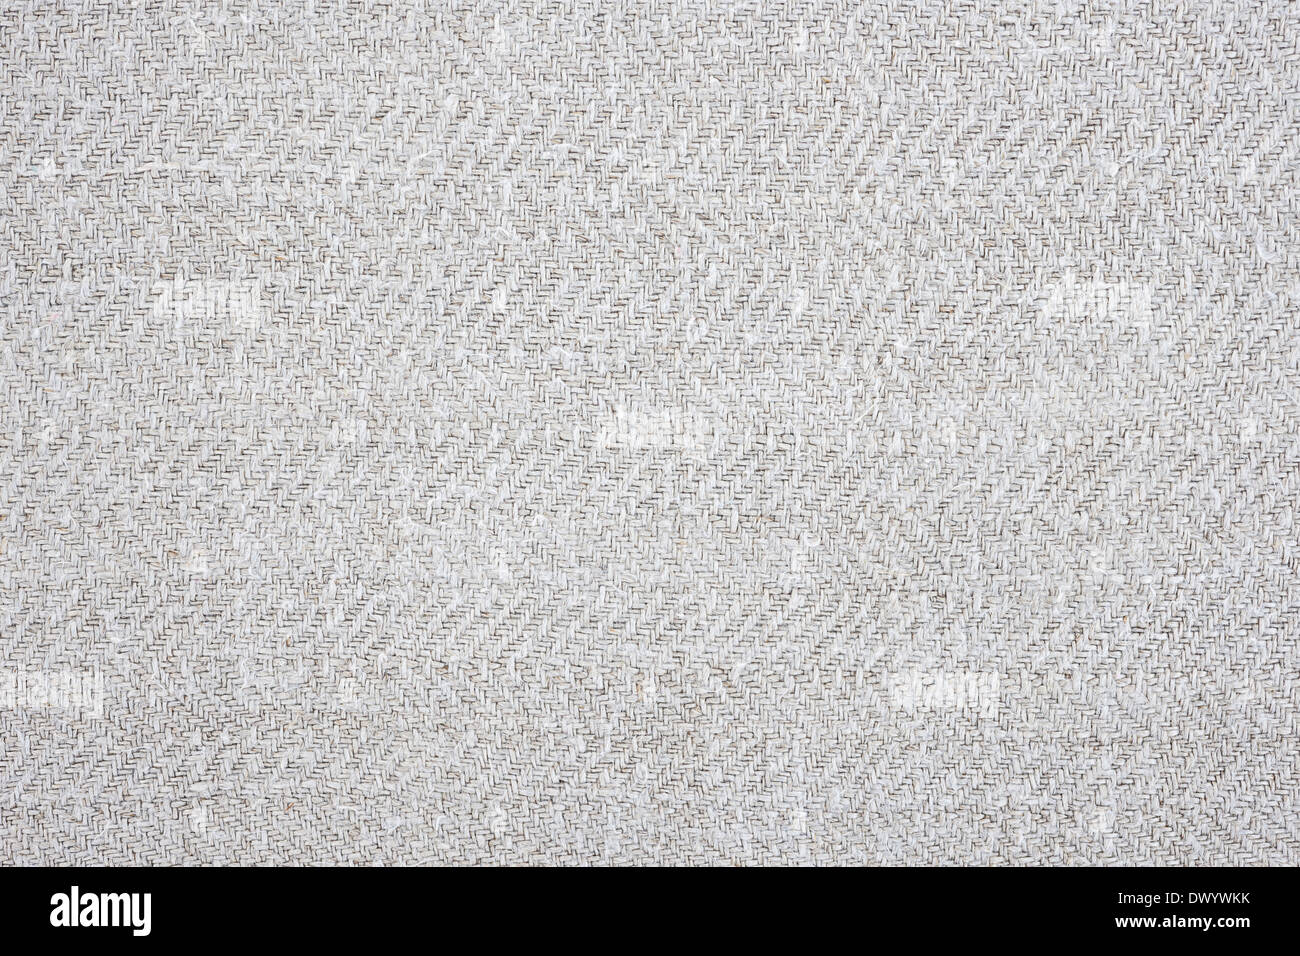 Vintage homespun handwoven linen fabric as background or texture Stock ...